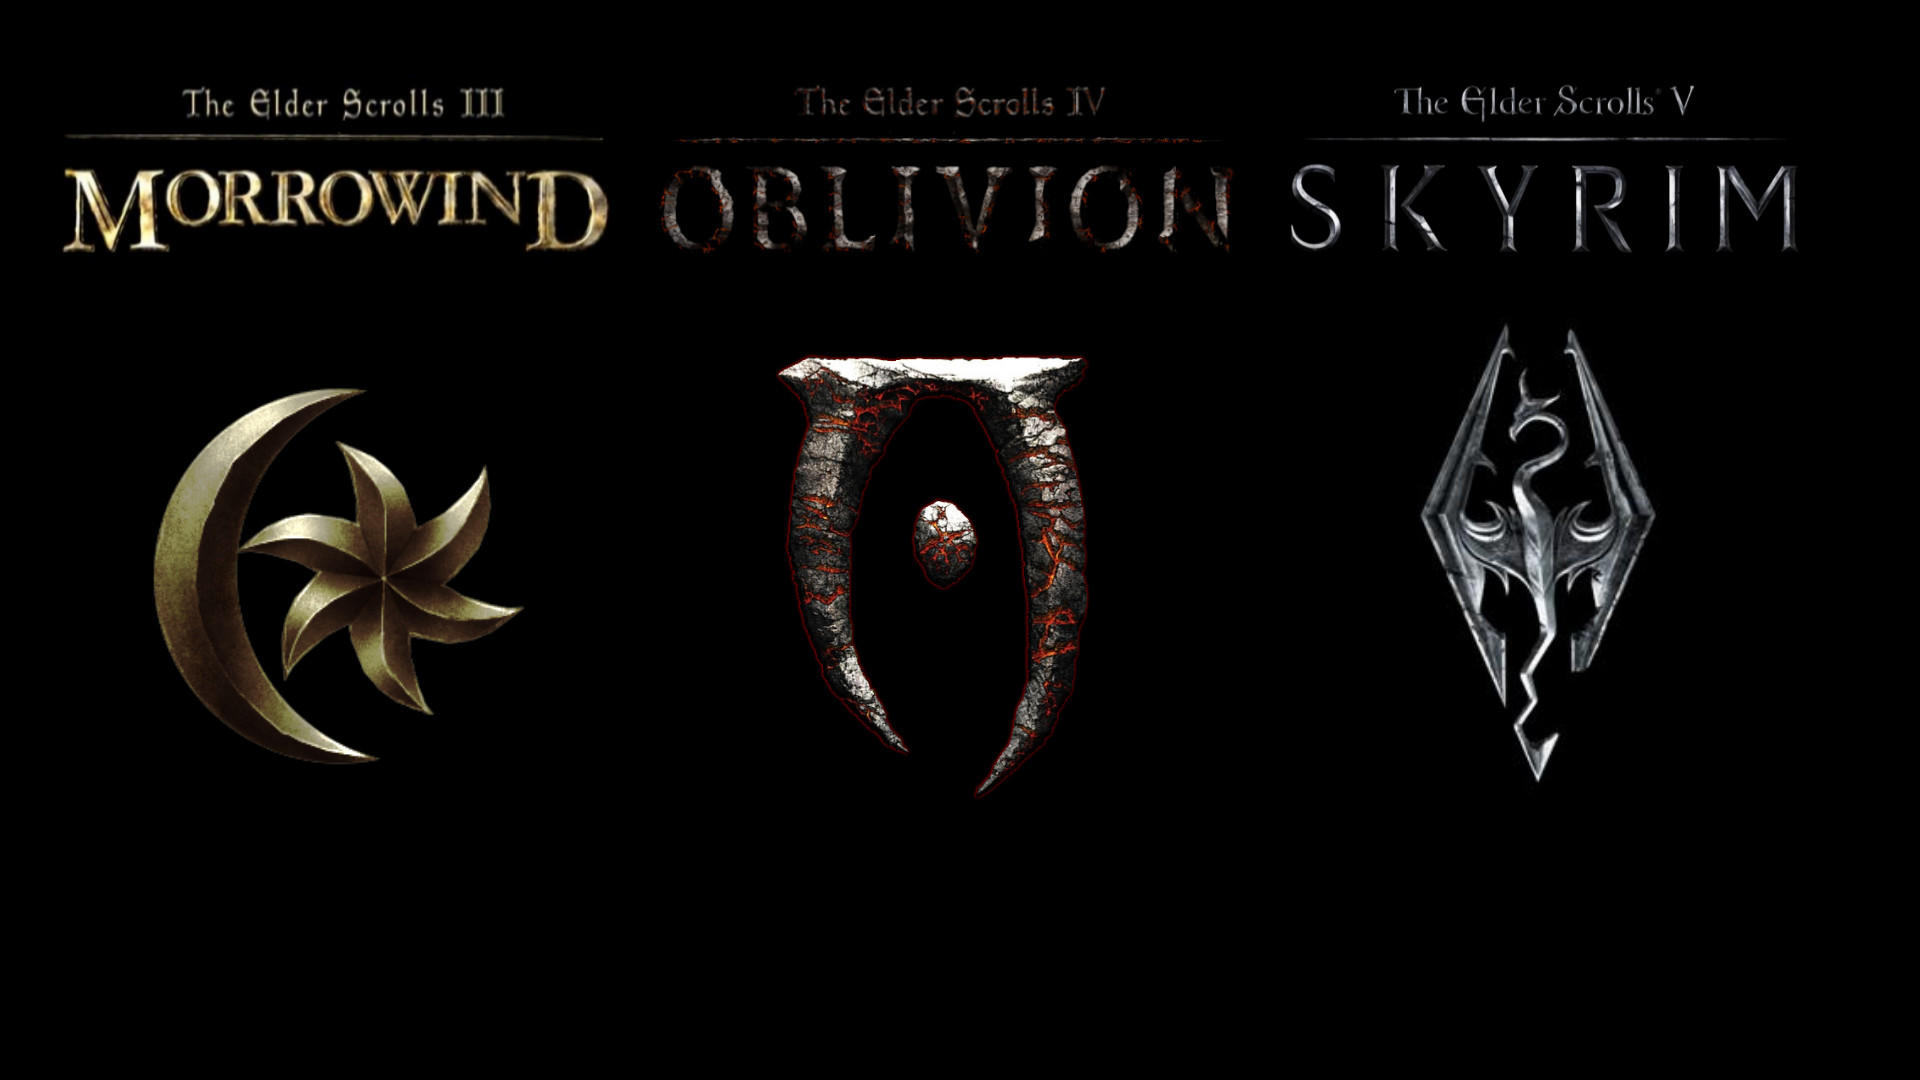 1920x1080 The Elder Scrolls III Morrowind IV Oblivion V Skyrim Video Games